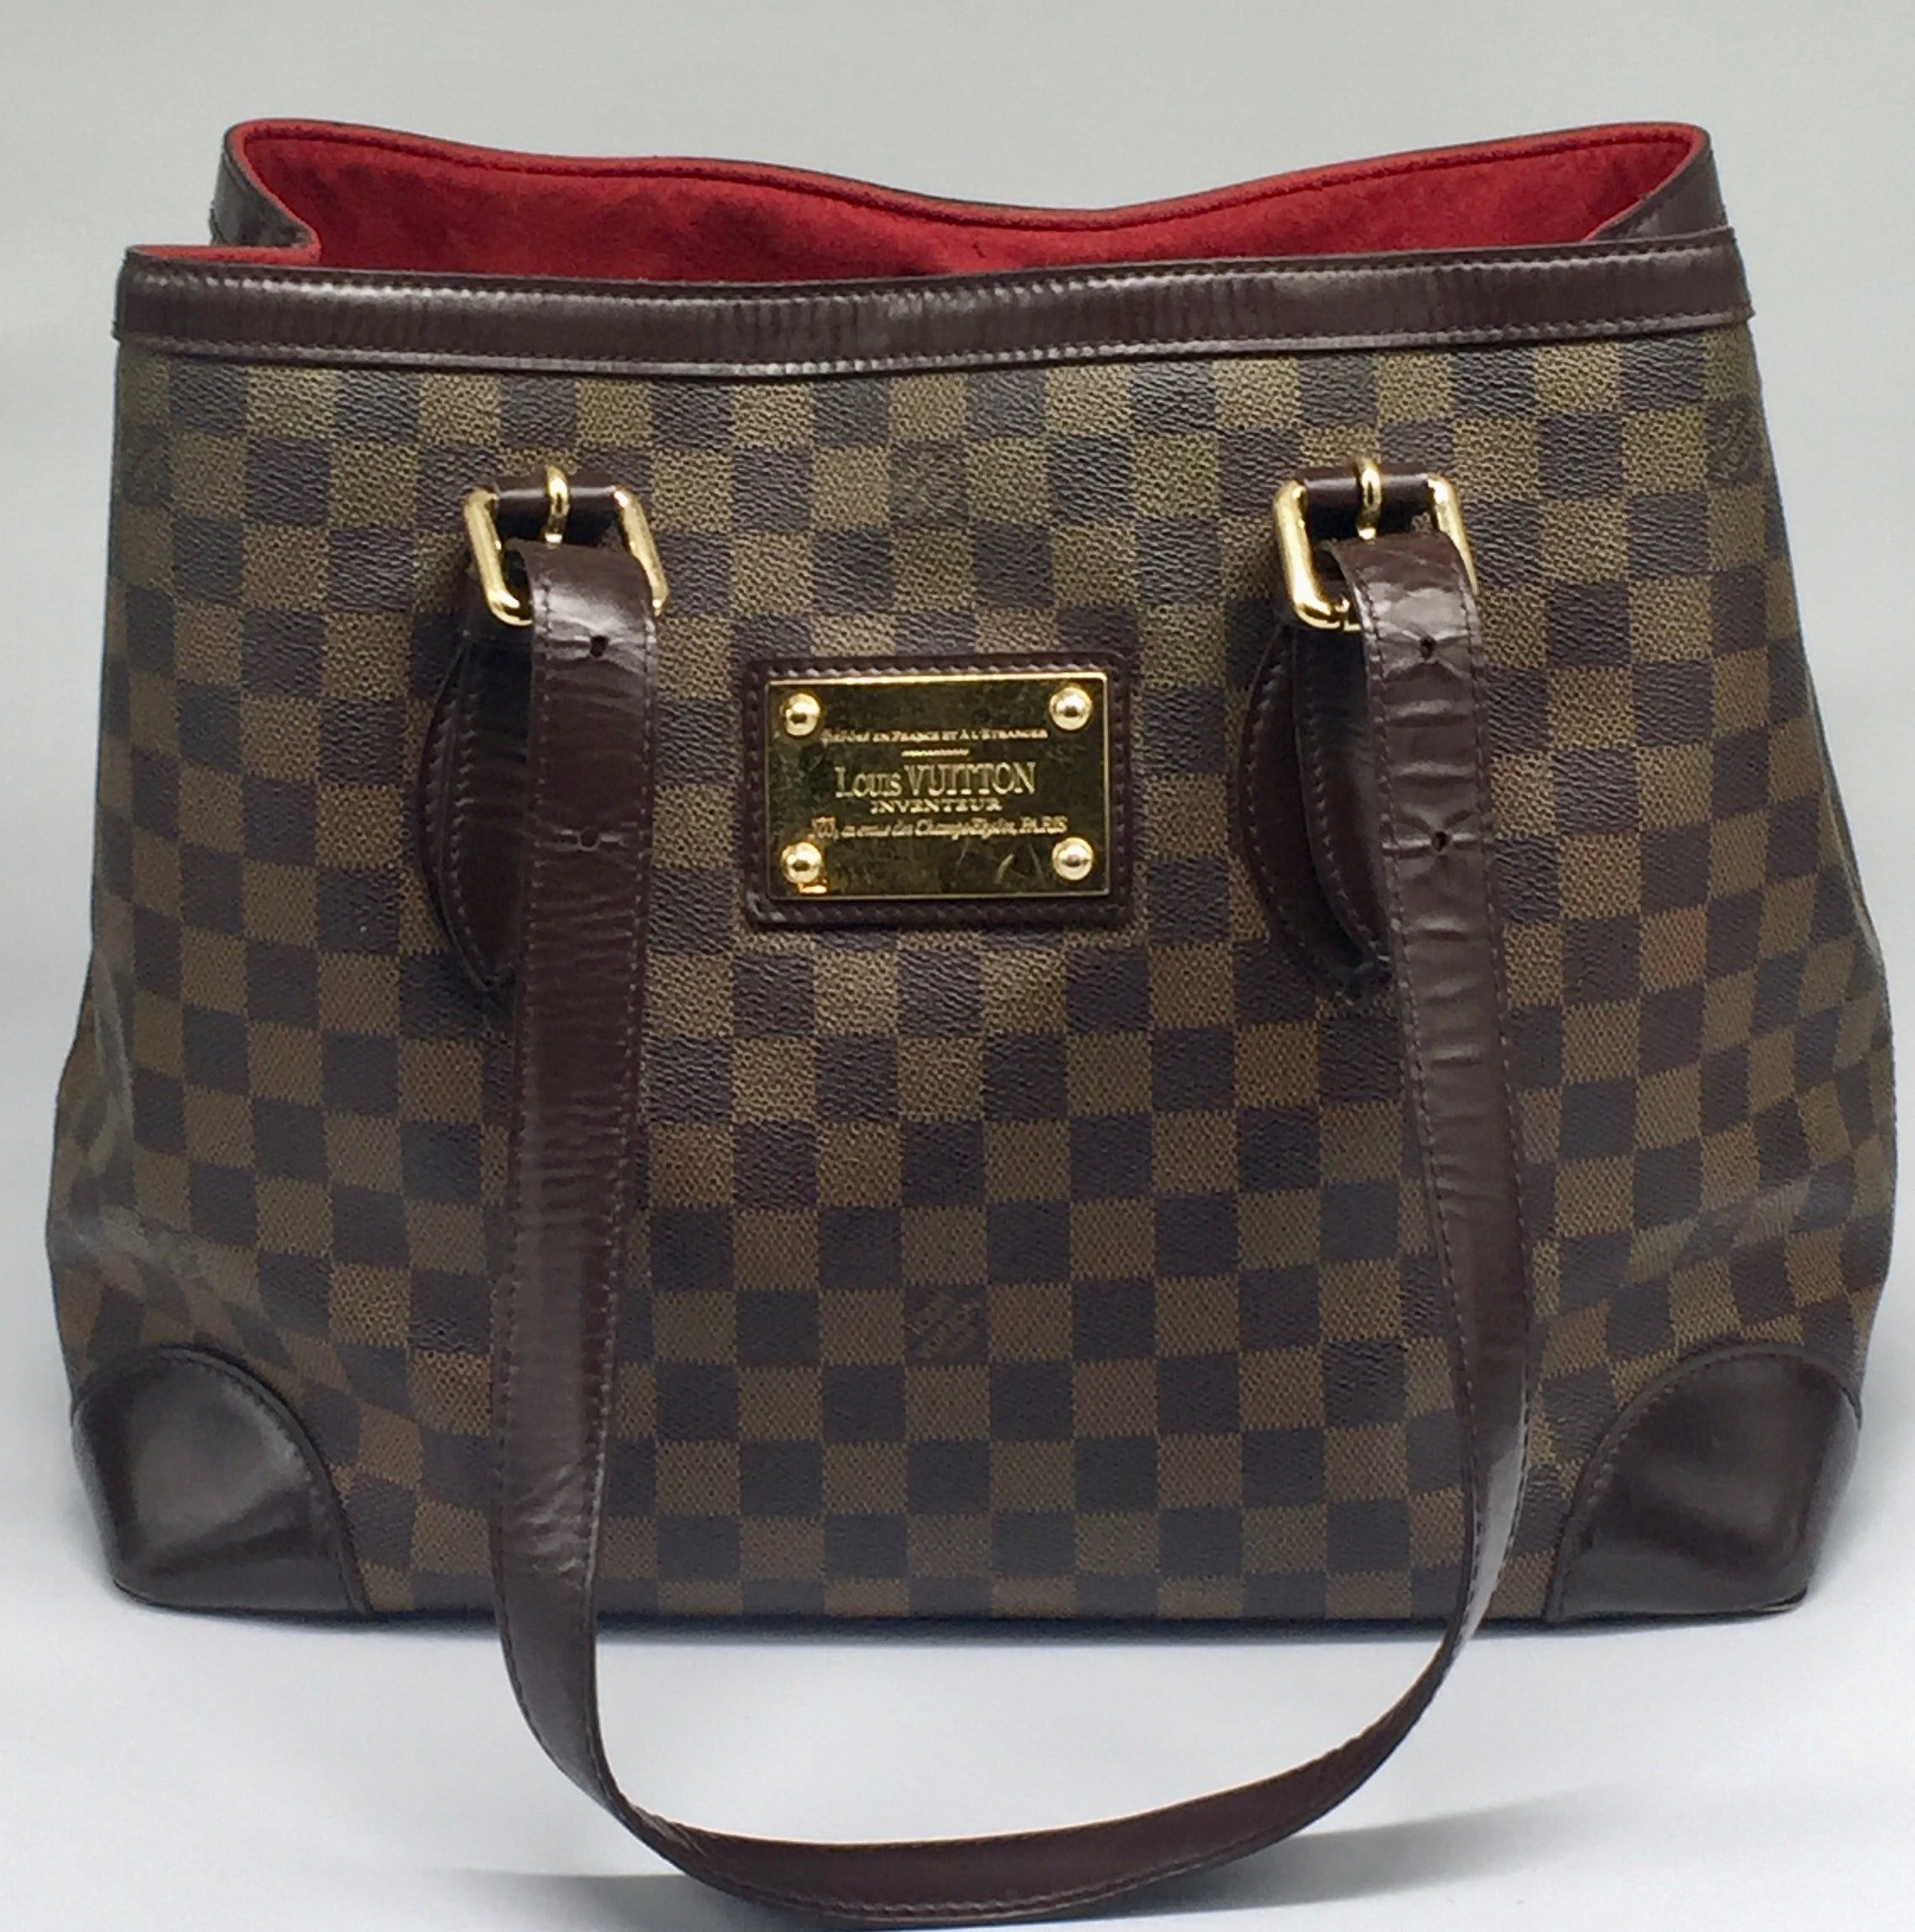 Auth Louis Vuitton Damier Hampstead MM N51204 Women's Tote Bag